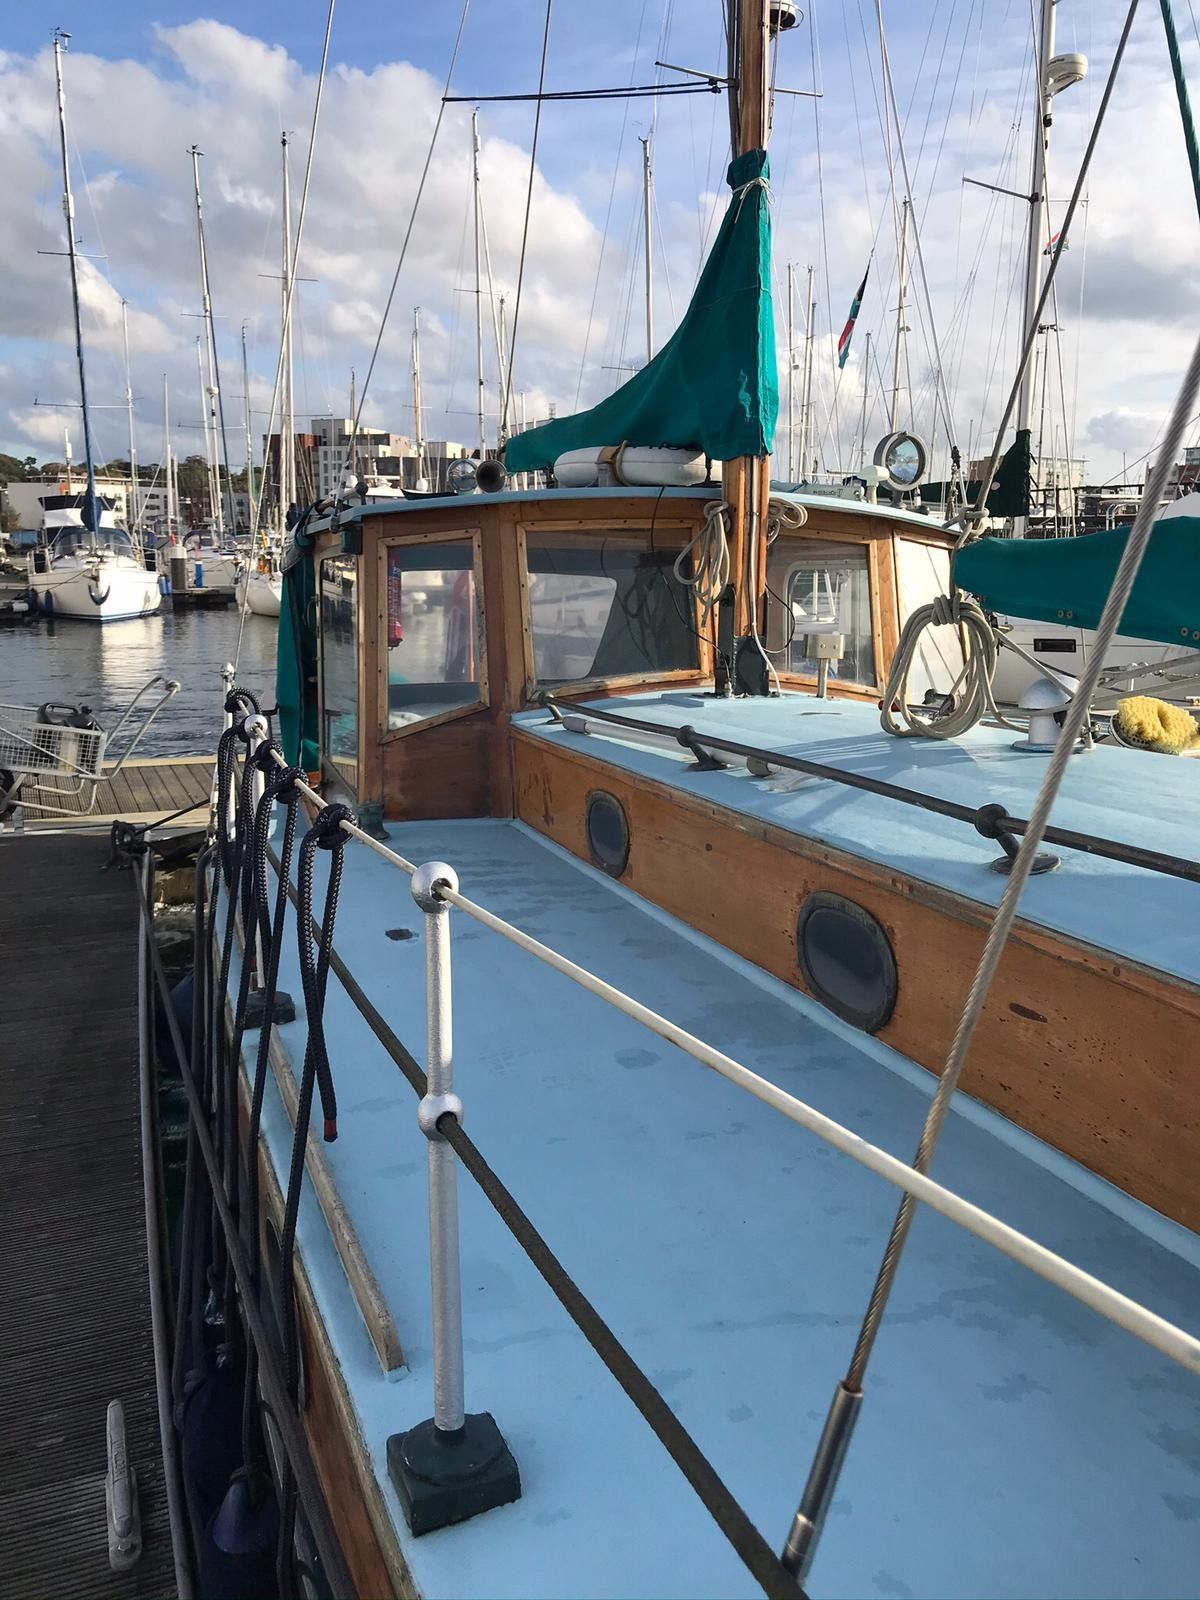 yachts for sale suffolk uk